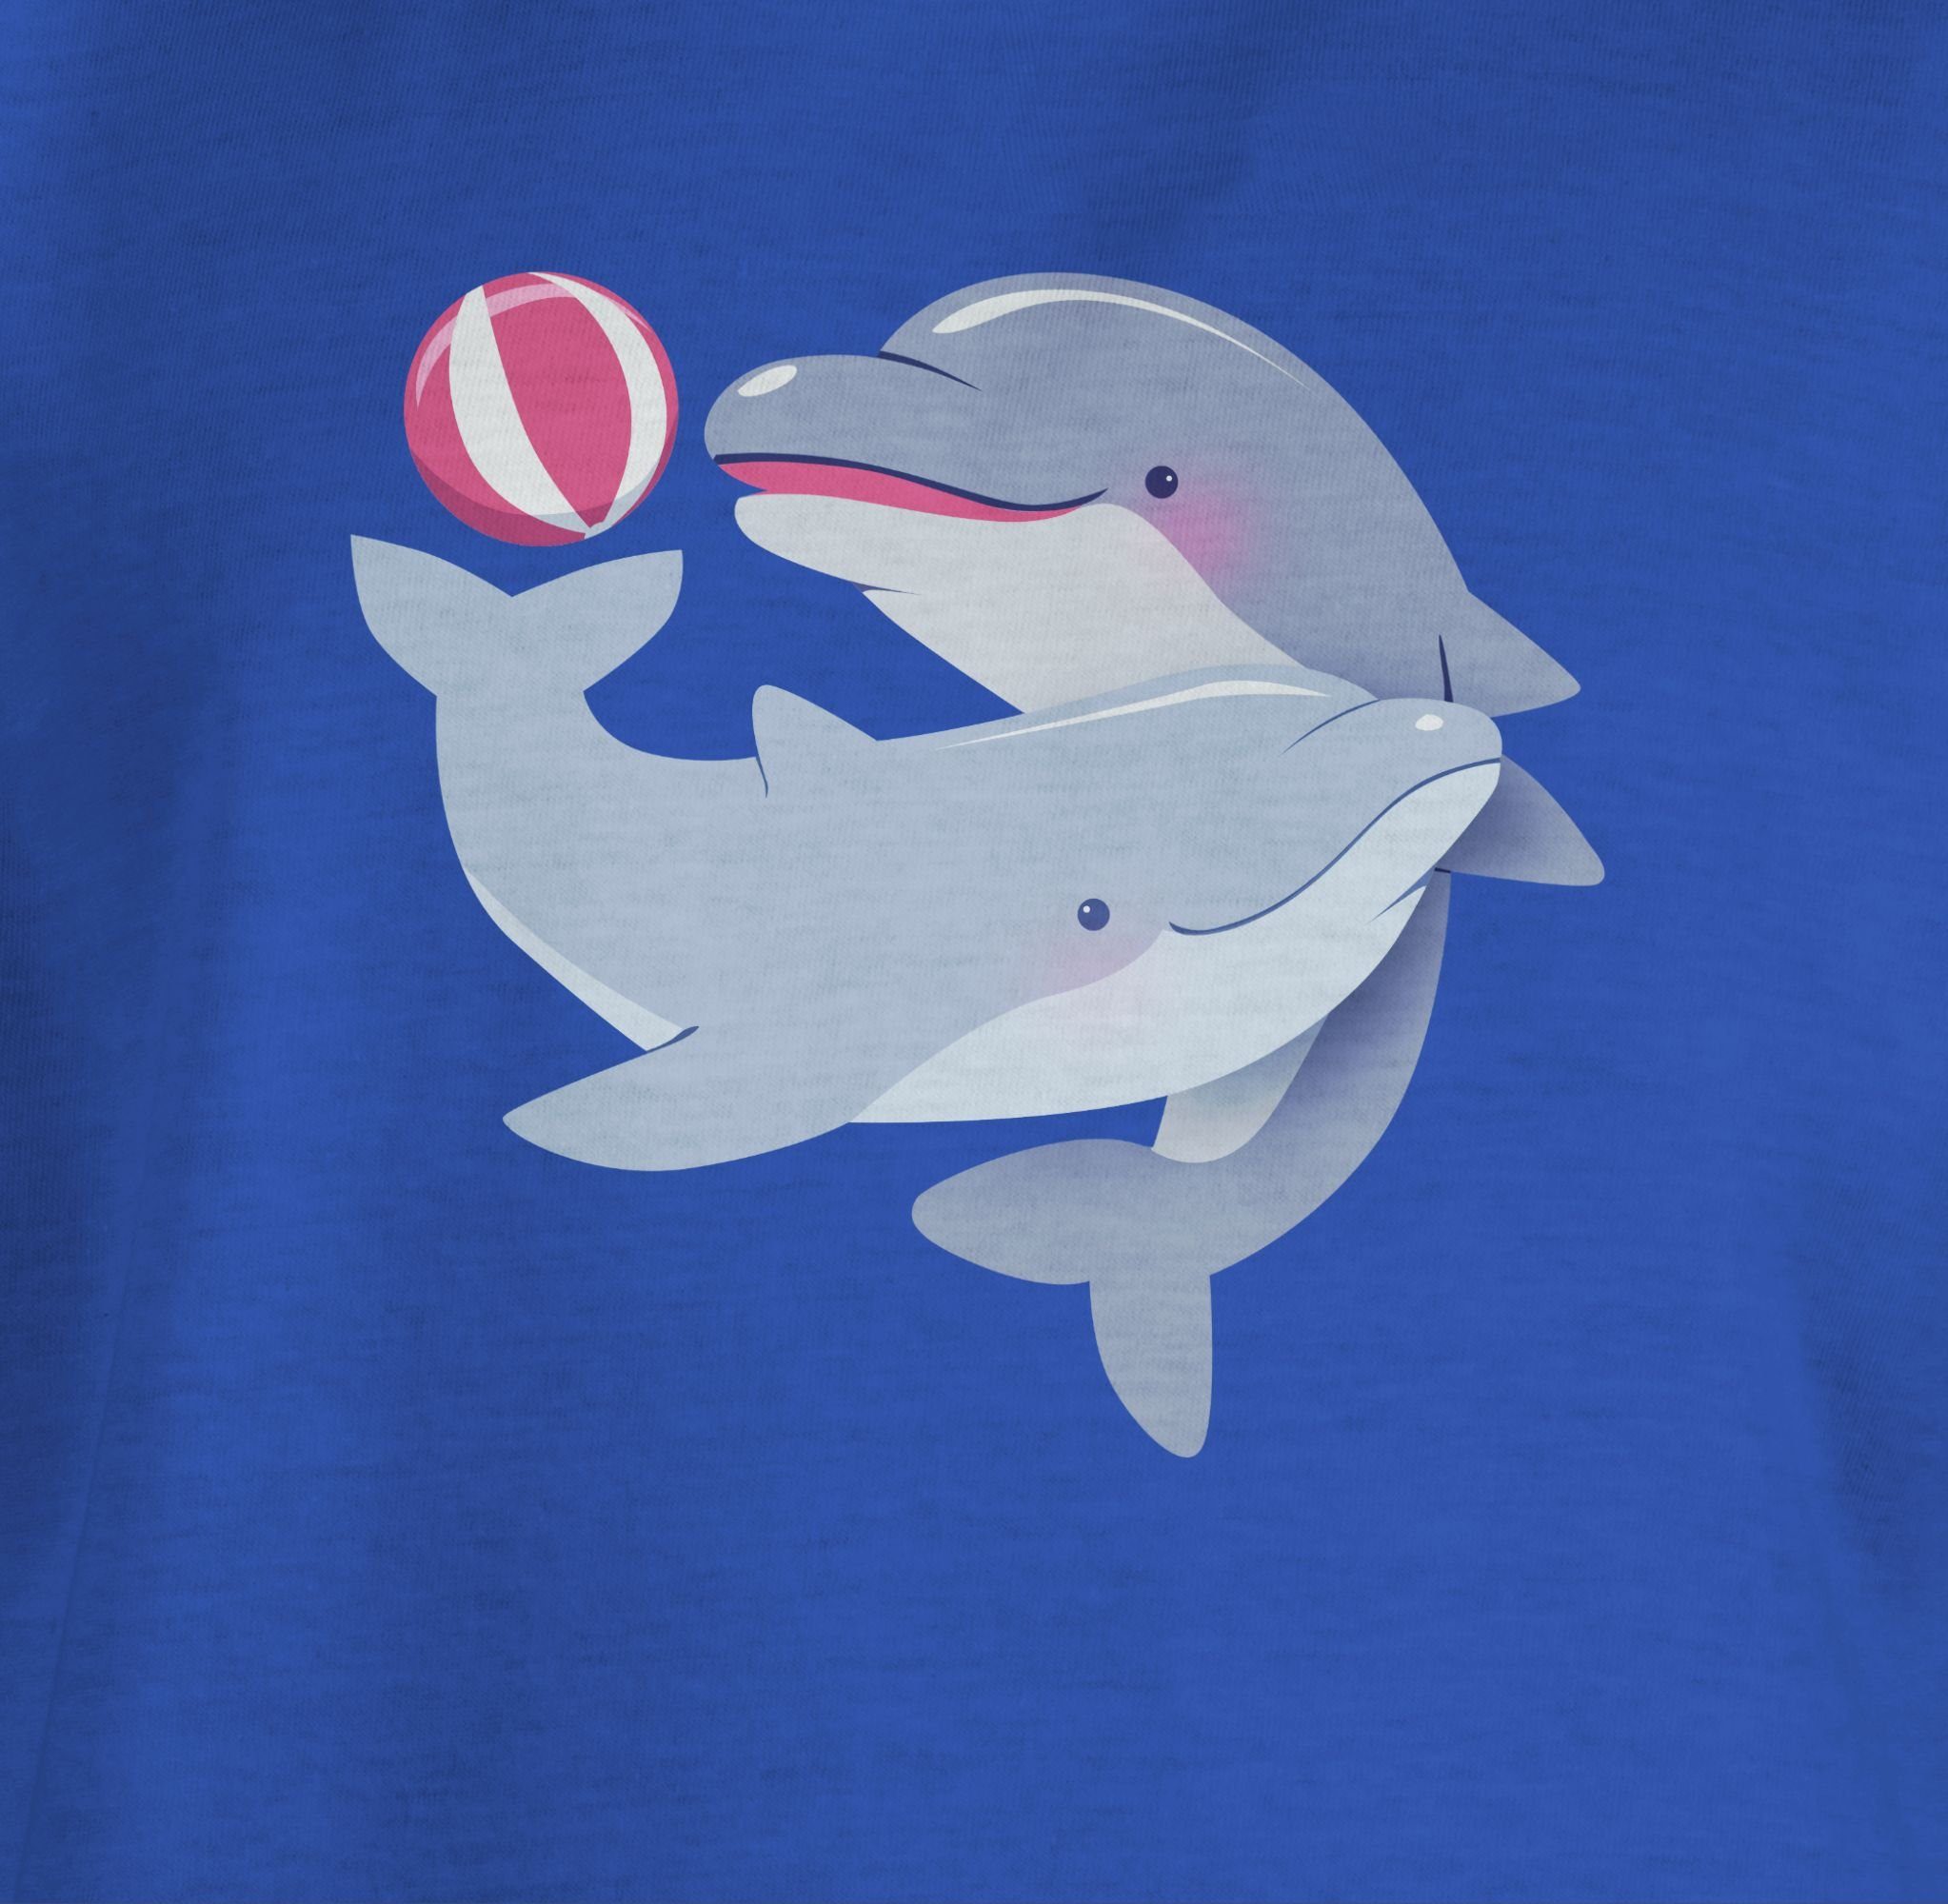 Shirtracer Delfine 1 T-Shirt Royalblau Print Tiermotiv Animal